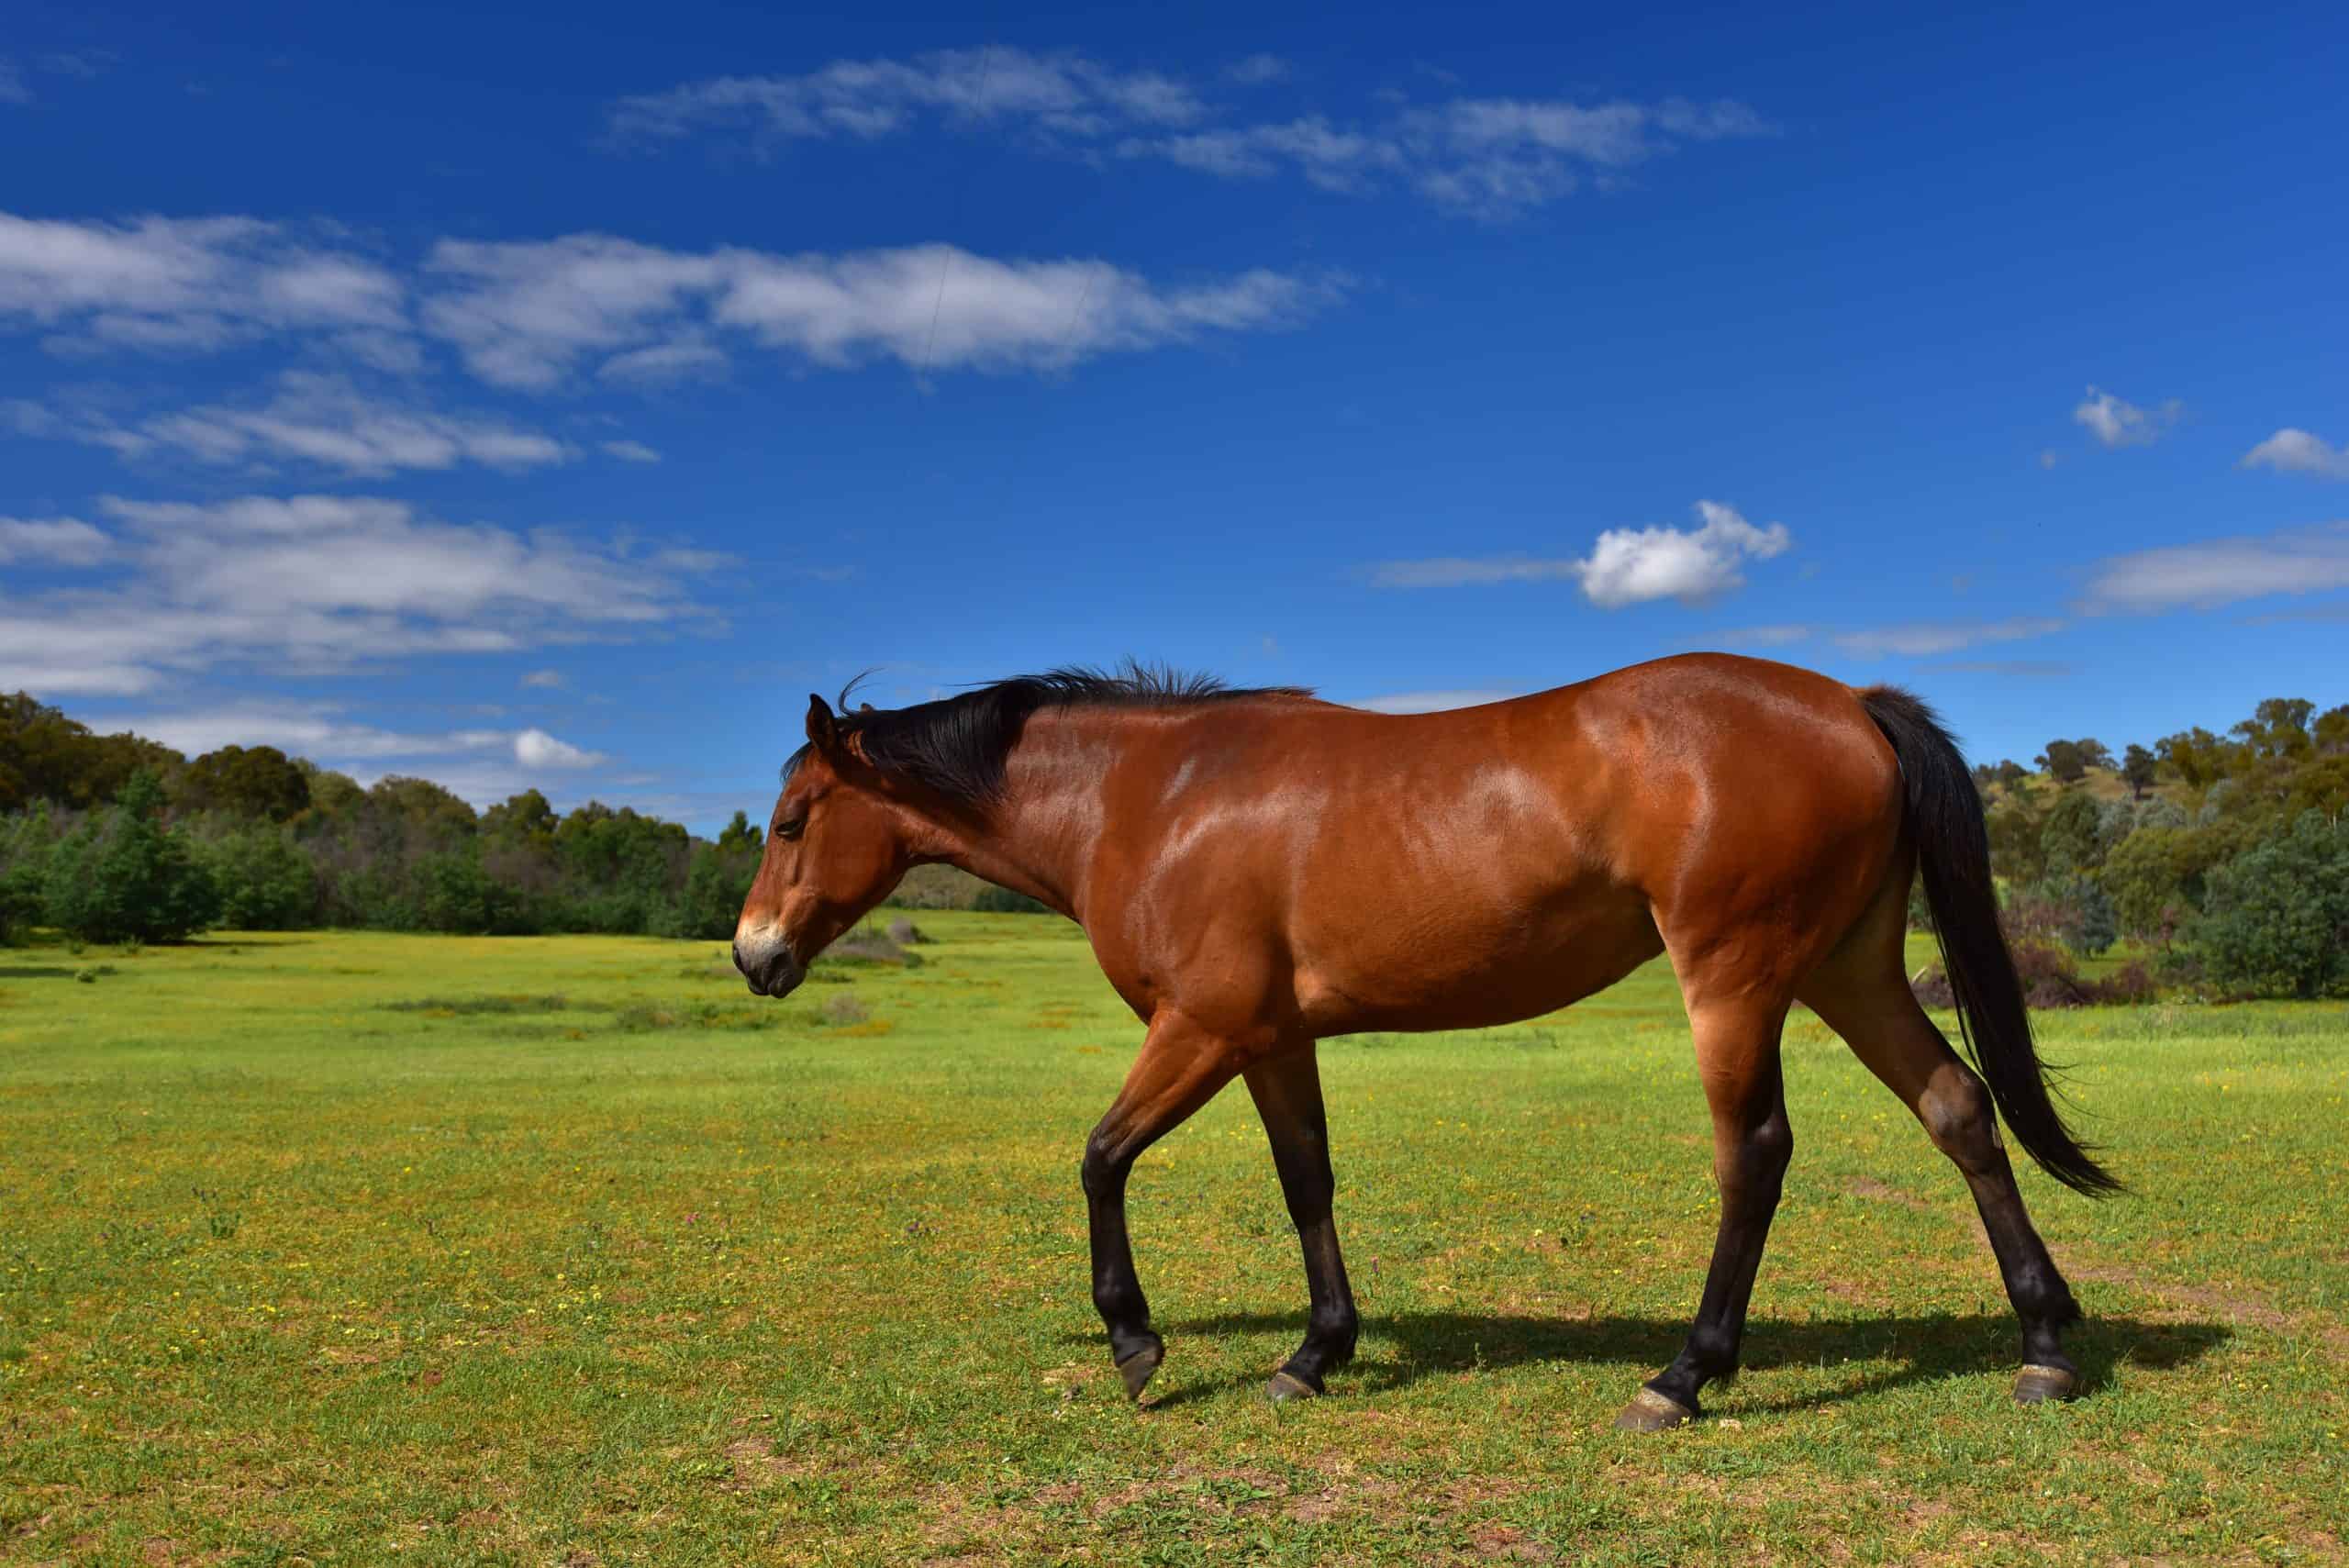 Horse eating grass in a farm